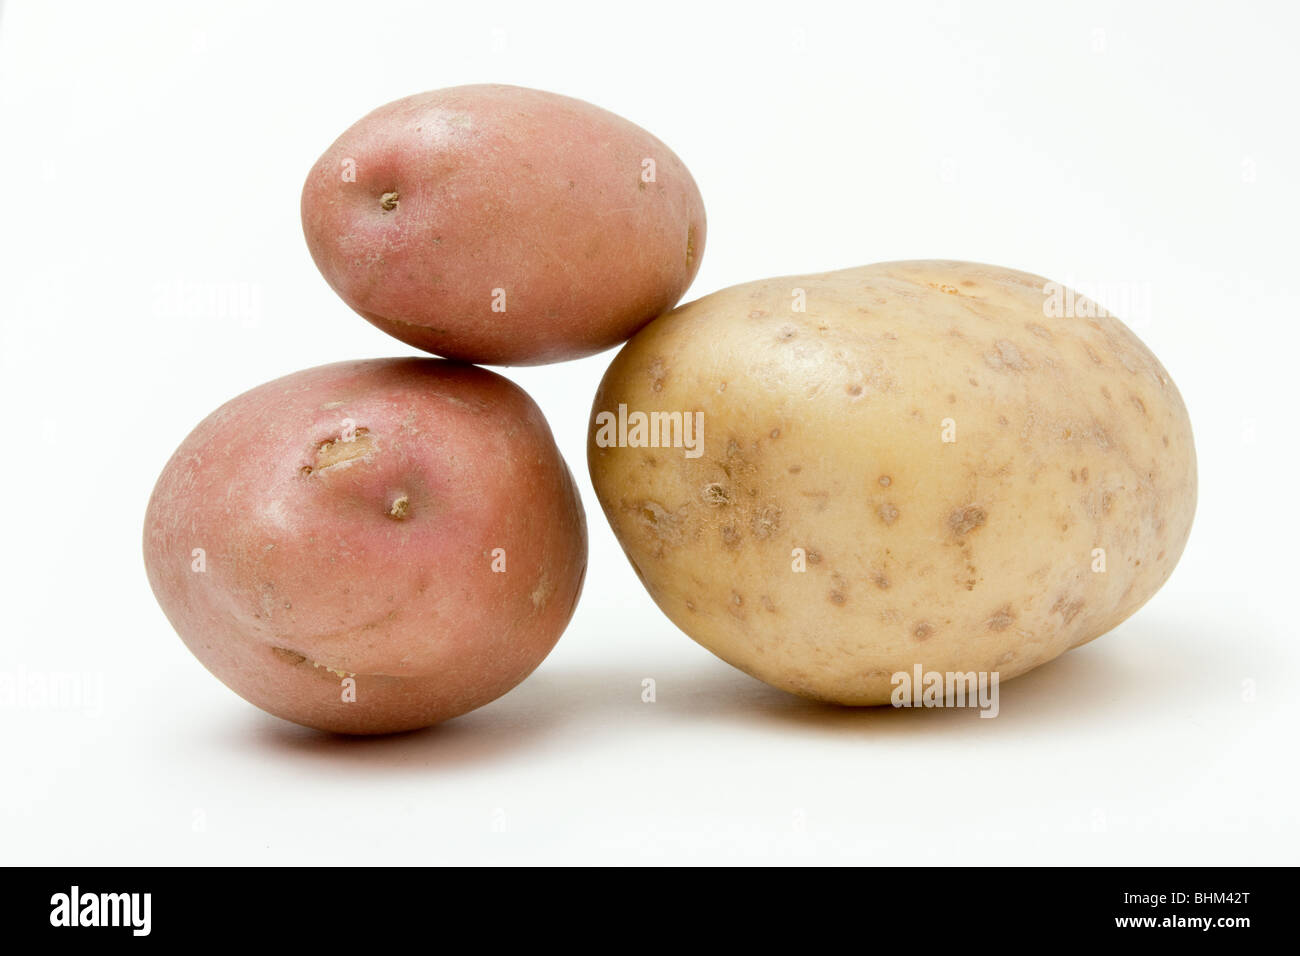 Zen like potato arrangement of three potatoes against white background. Stock Photo